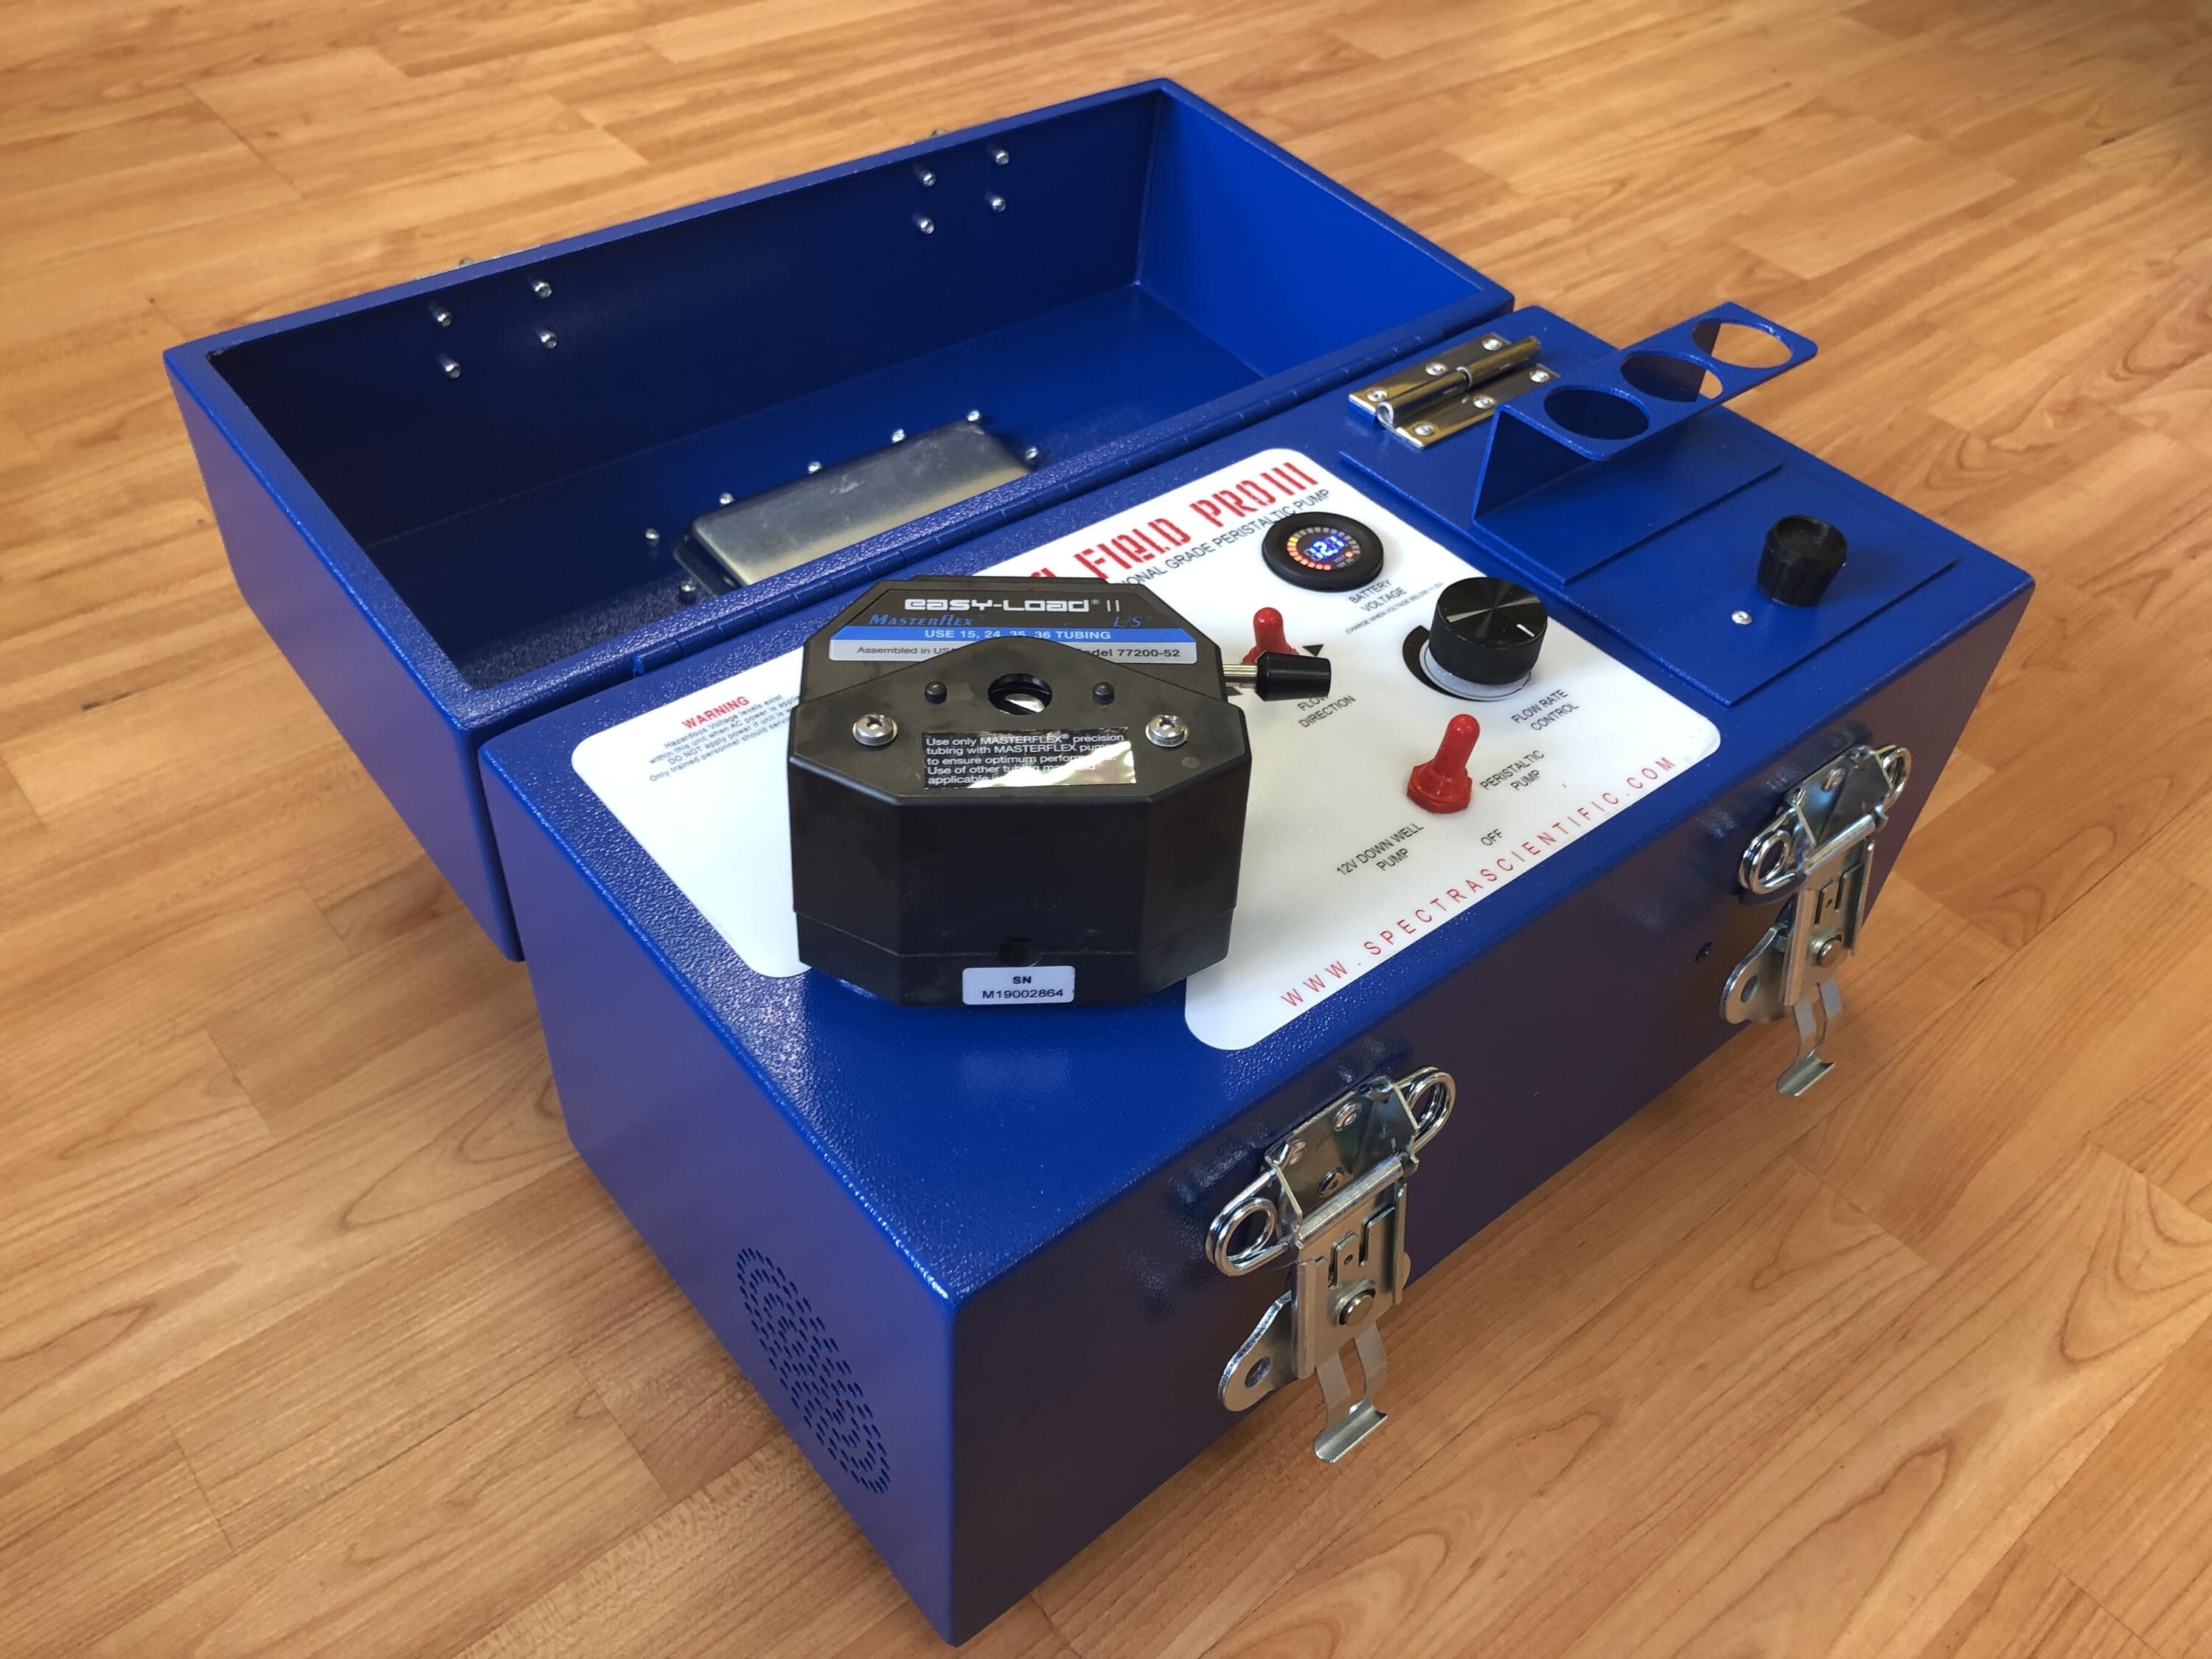 pump equipment in blue metal case